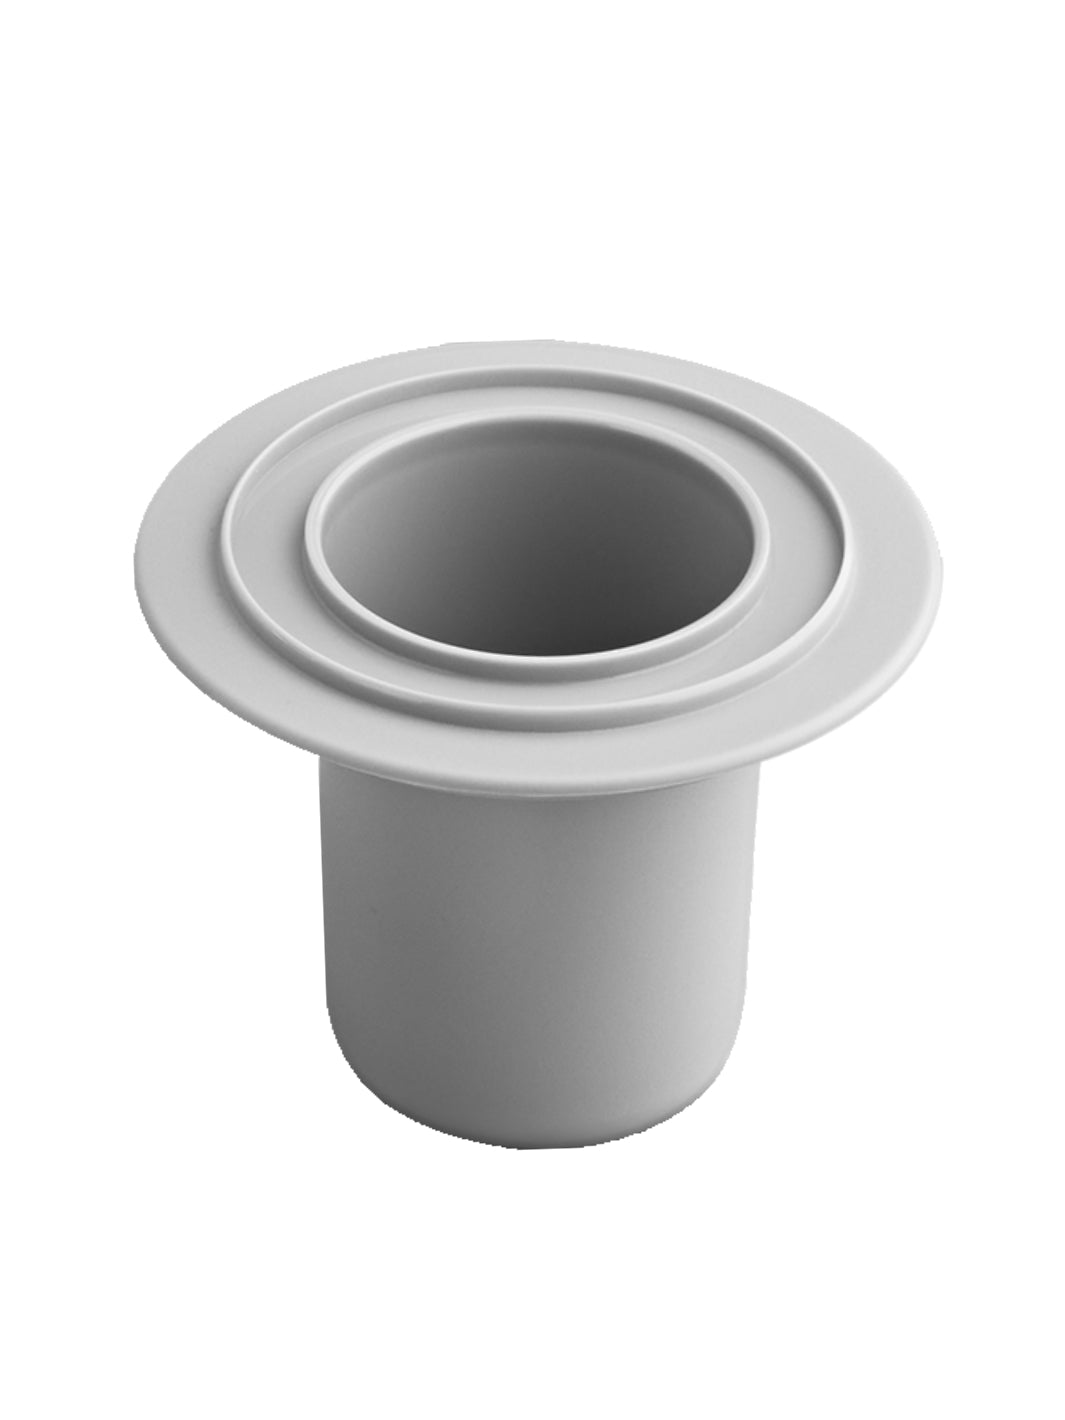 FELLOW Opus Replacement Portafilter Dosing Cup